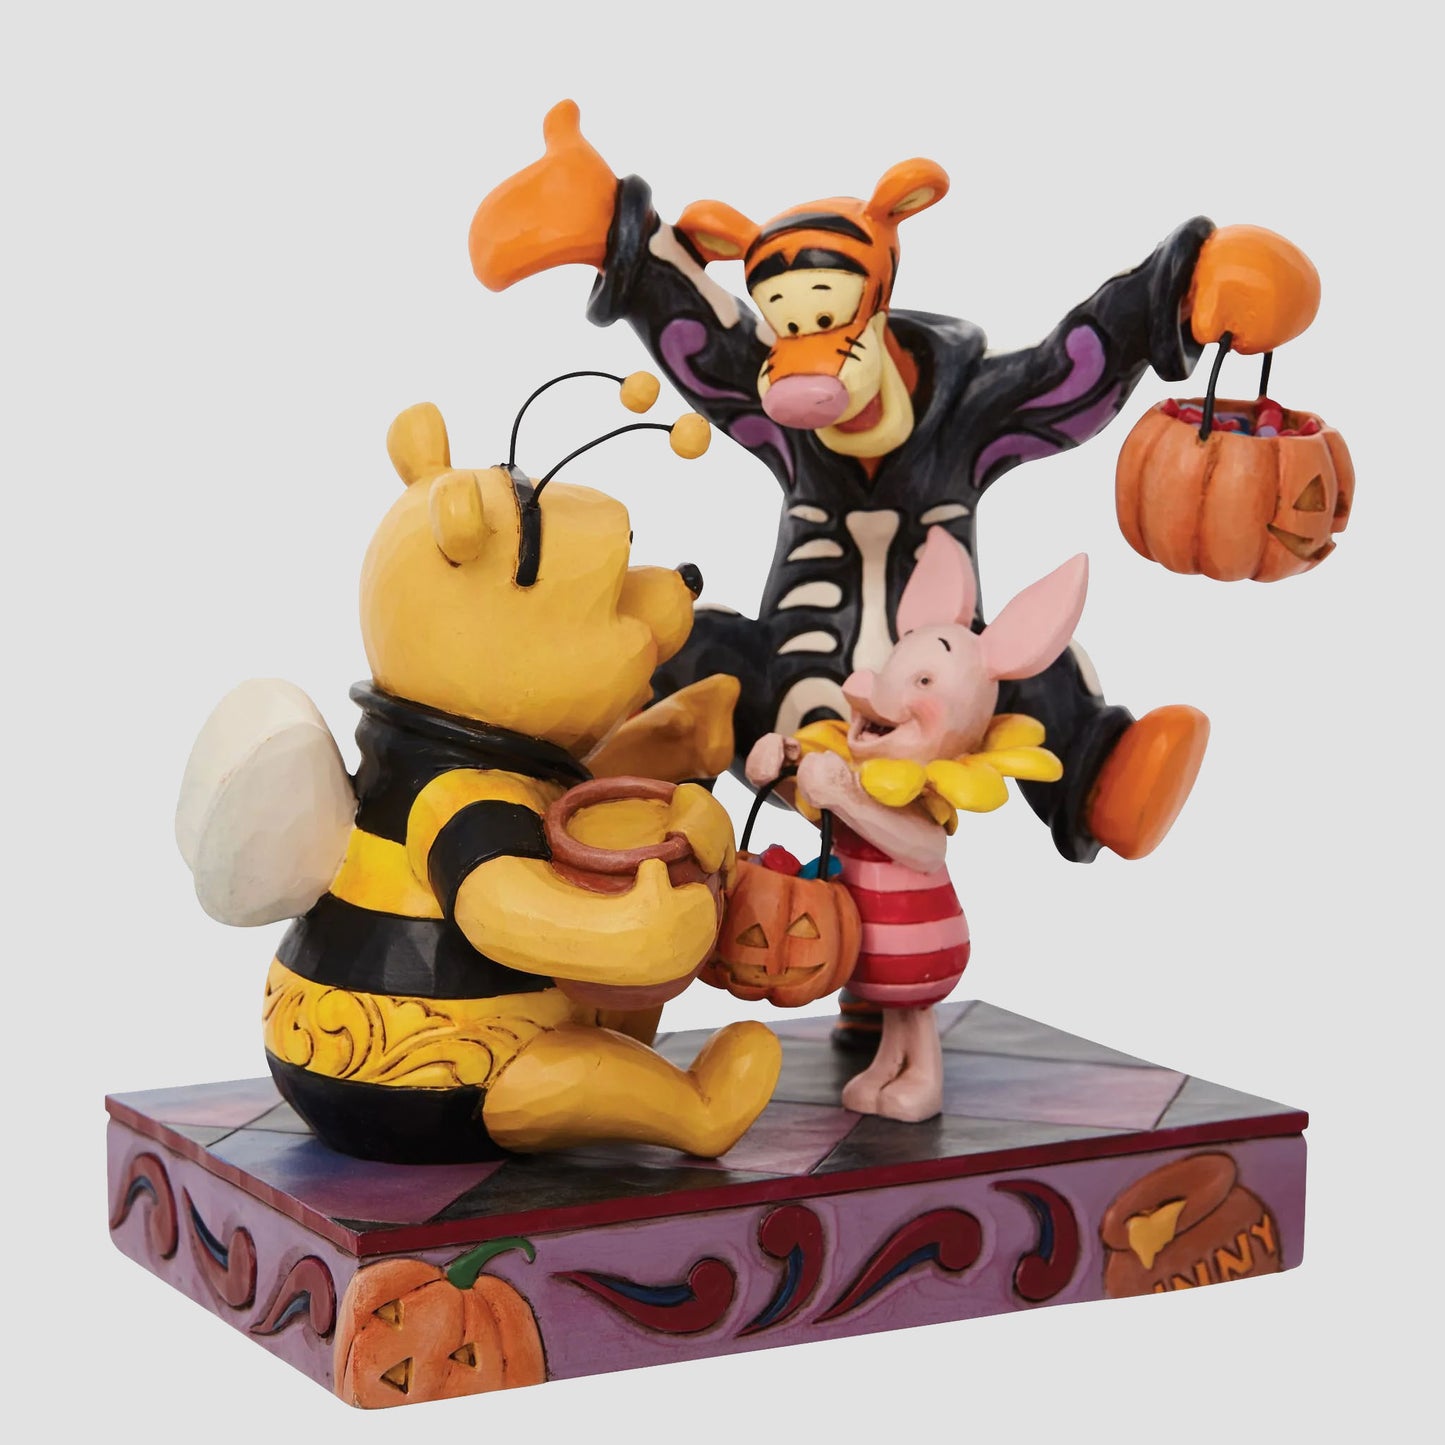 Pooh, Piglet, & Tigger "A Spook-tacular Halloween" (Winnie the Pooh) Jim Shore Disney Traditions Statue